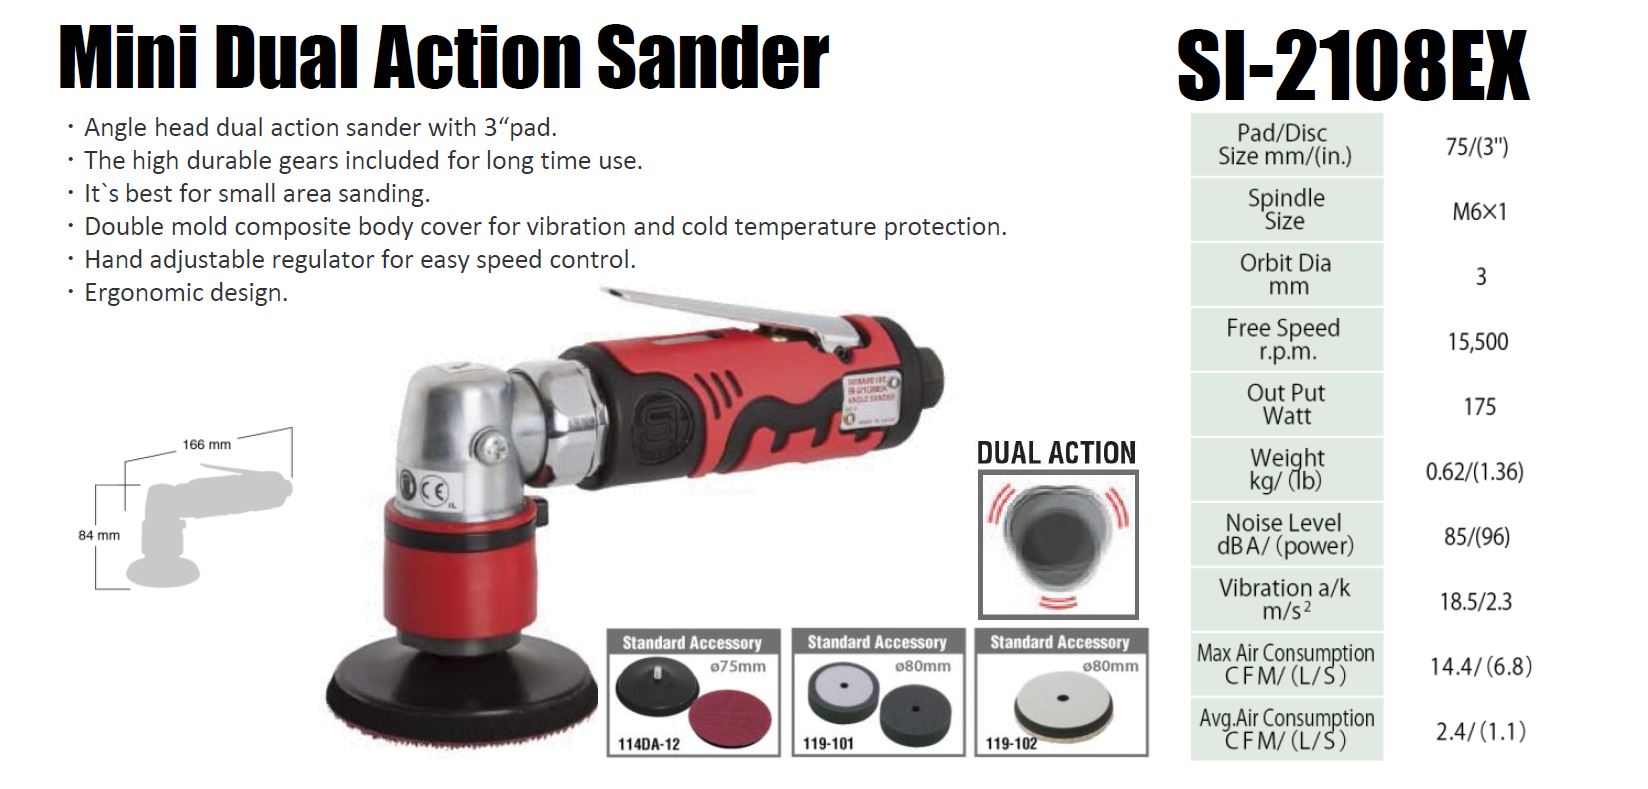 APerformance Tools || SI-2108EX Mini Dual Action Sander